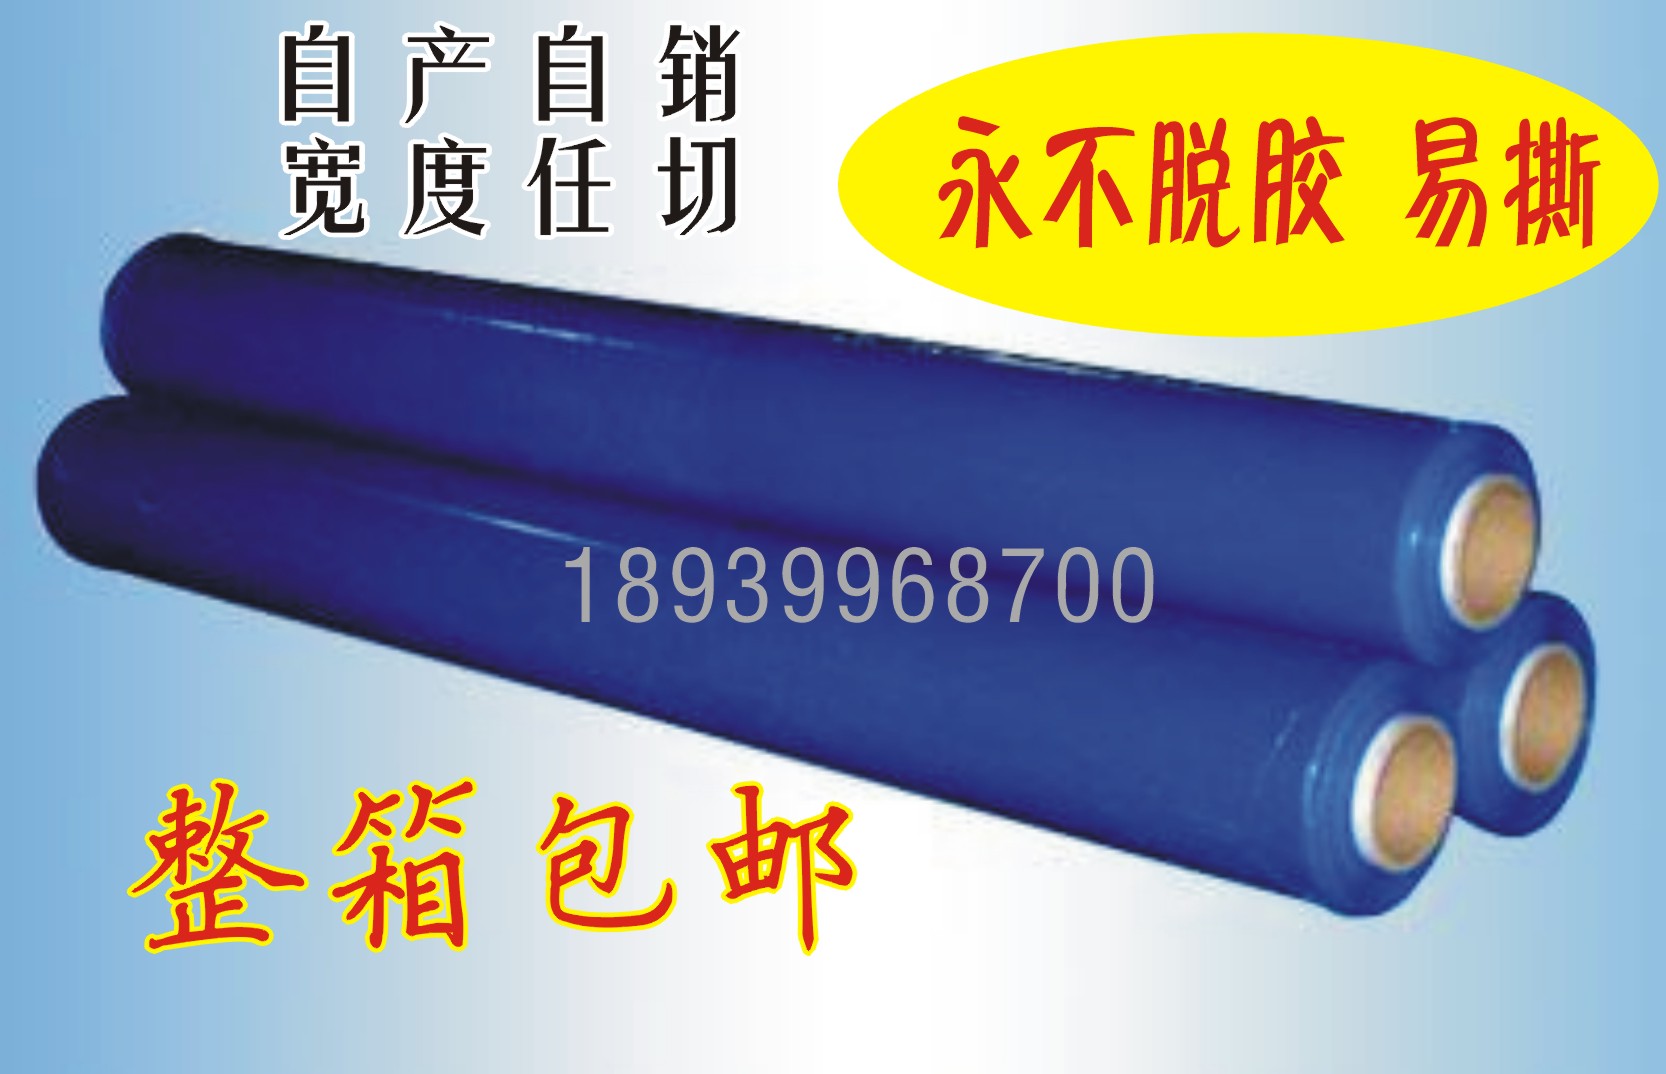 Stainless steel anti - plate PE protective film 1 2 m width * 100M long Blue film Low medium - high - viscosity